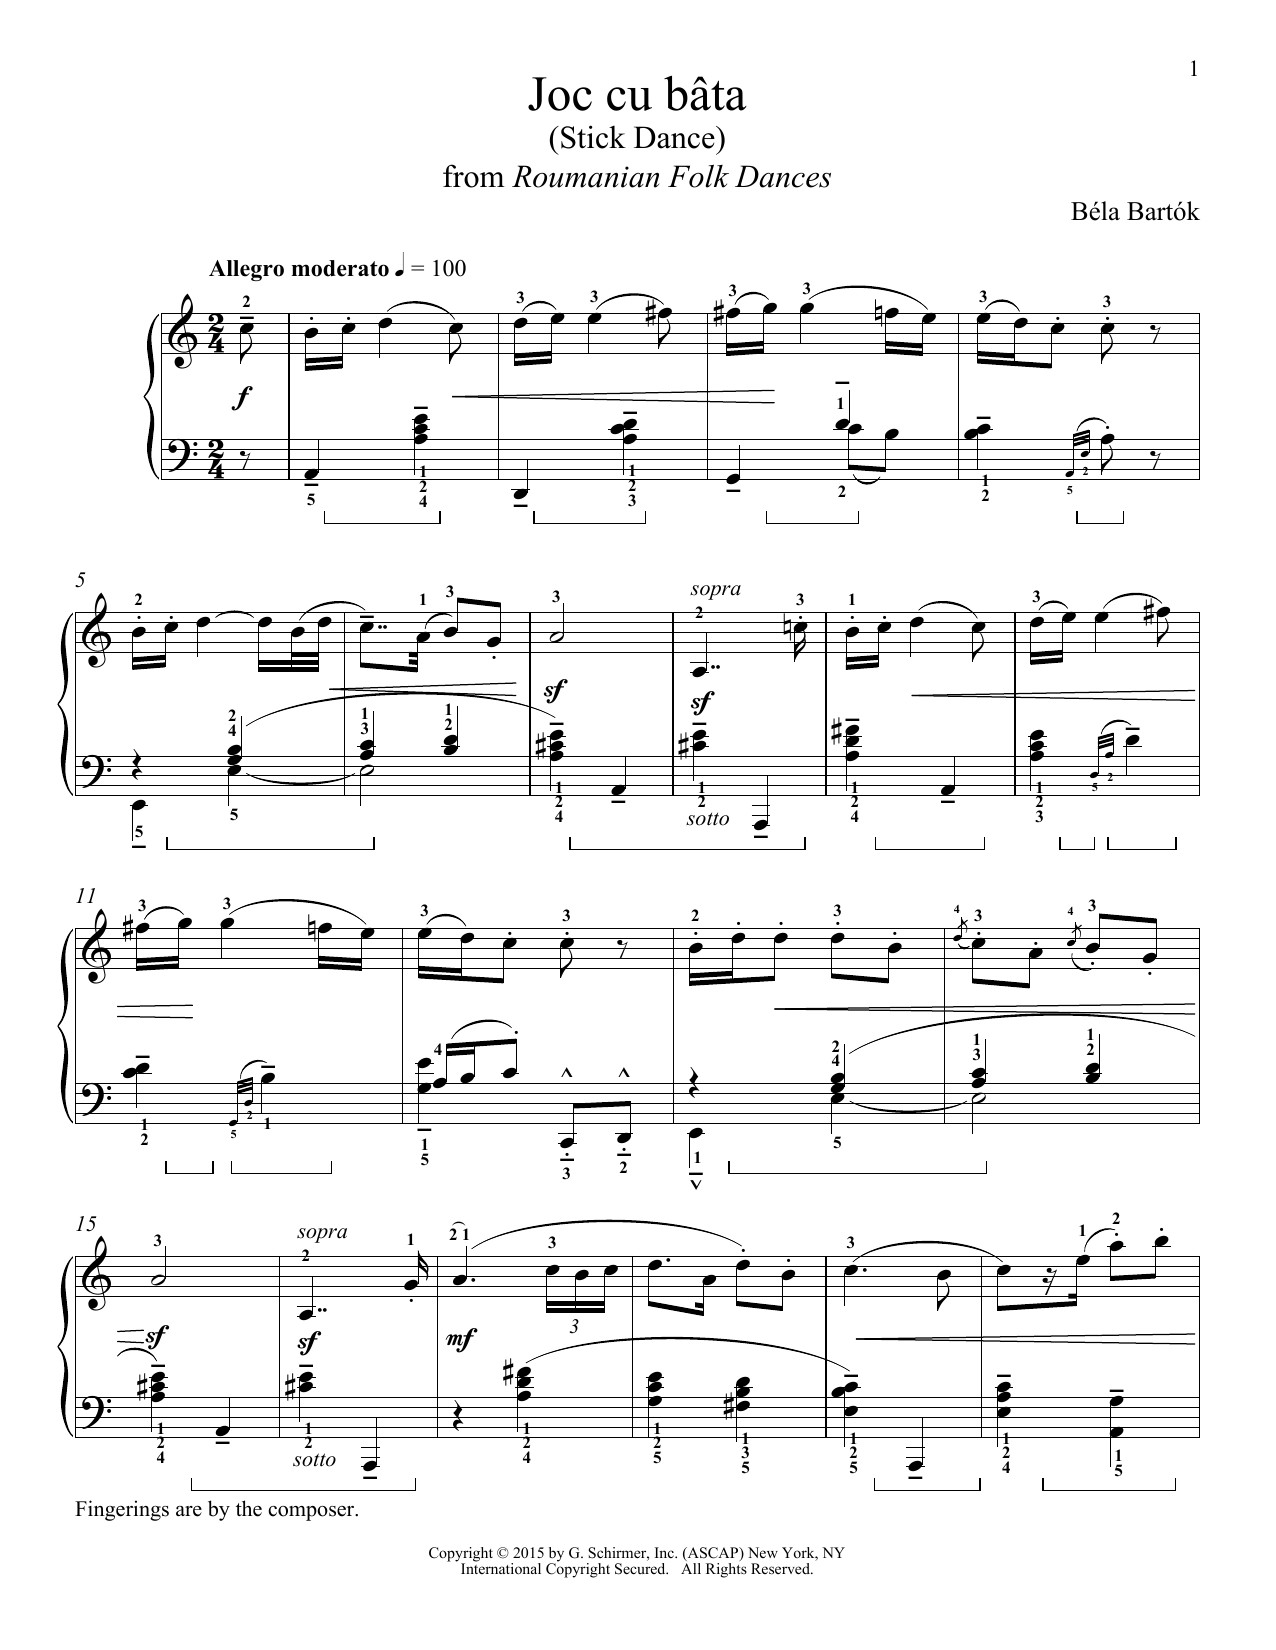 Béla Bartók Joc cu bata Sheet Music Notes & Chords for Piano - Download or Print PDF